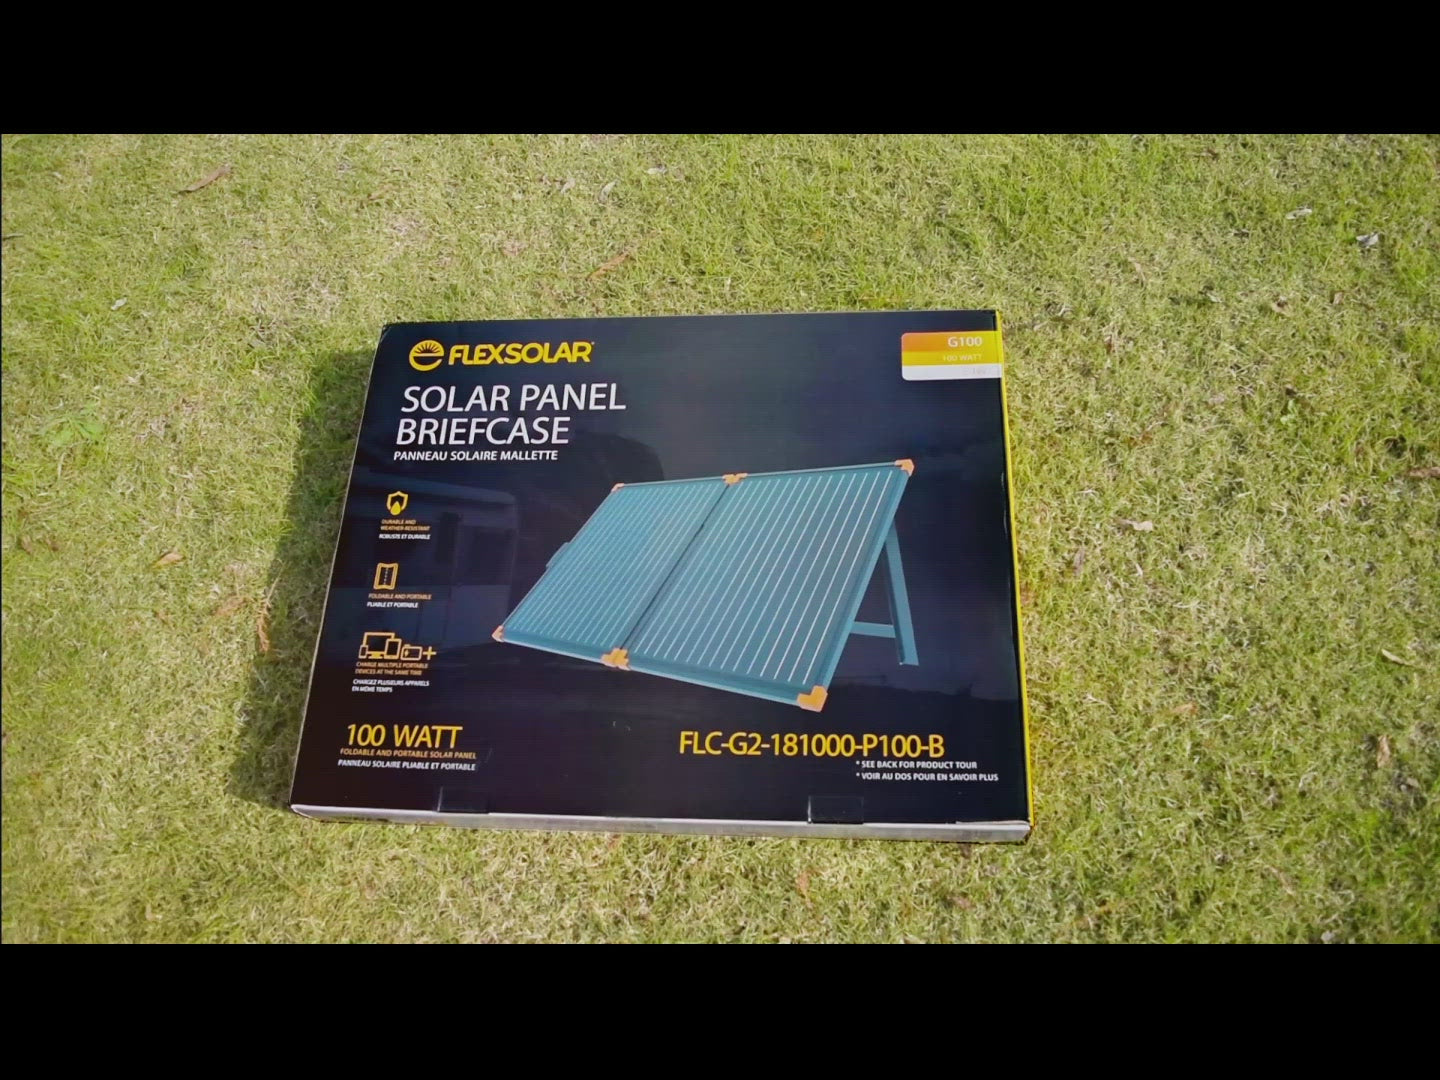 200W Briefcase Solar Panel Kit